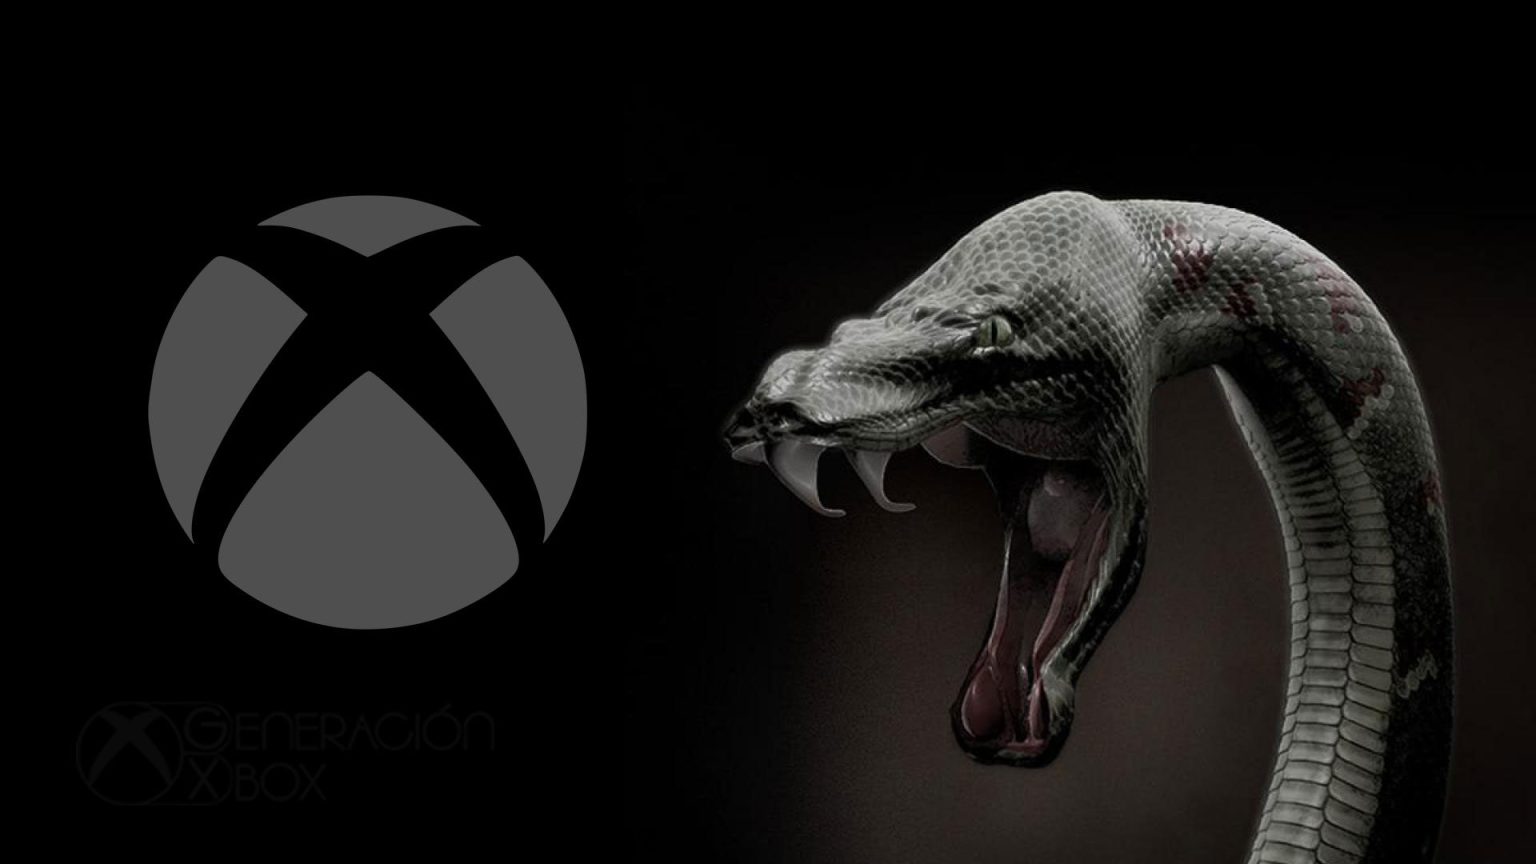 Xbox Anaconda